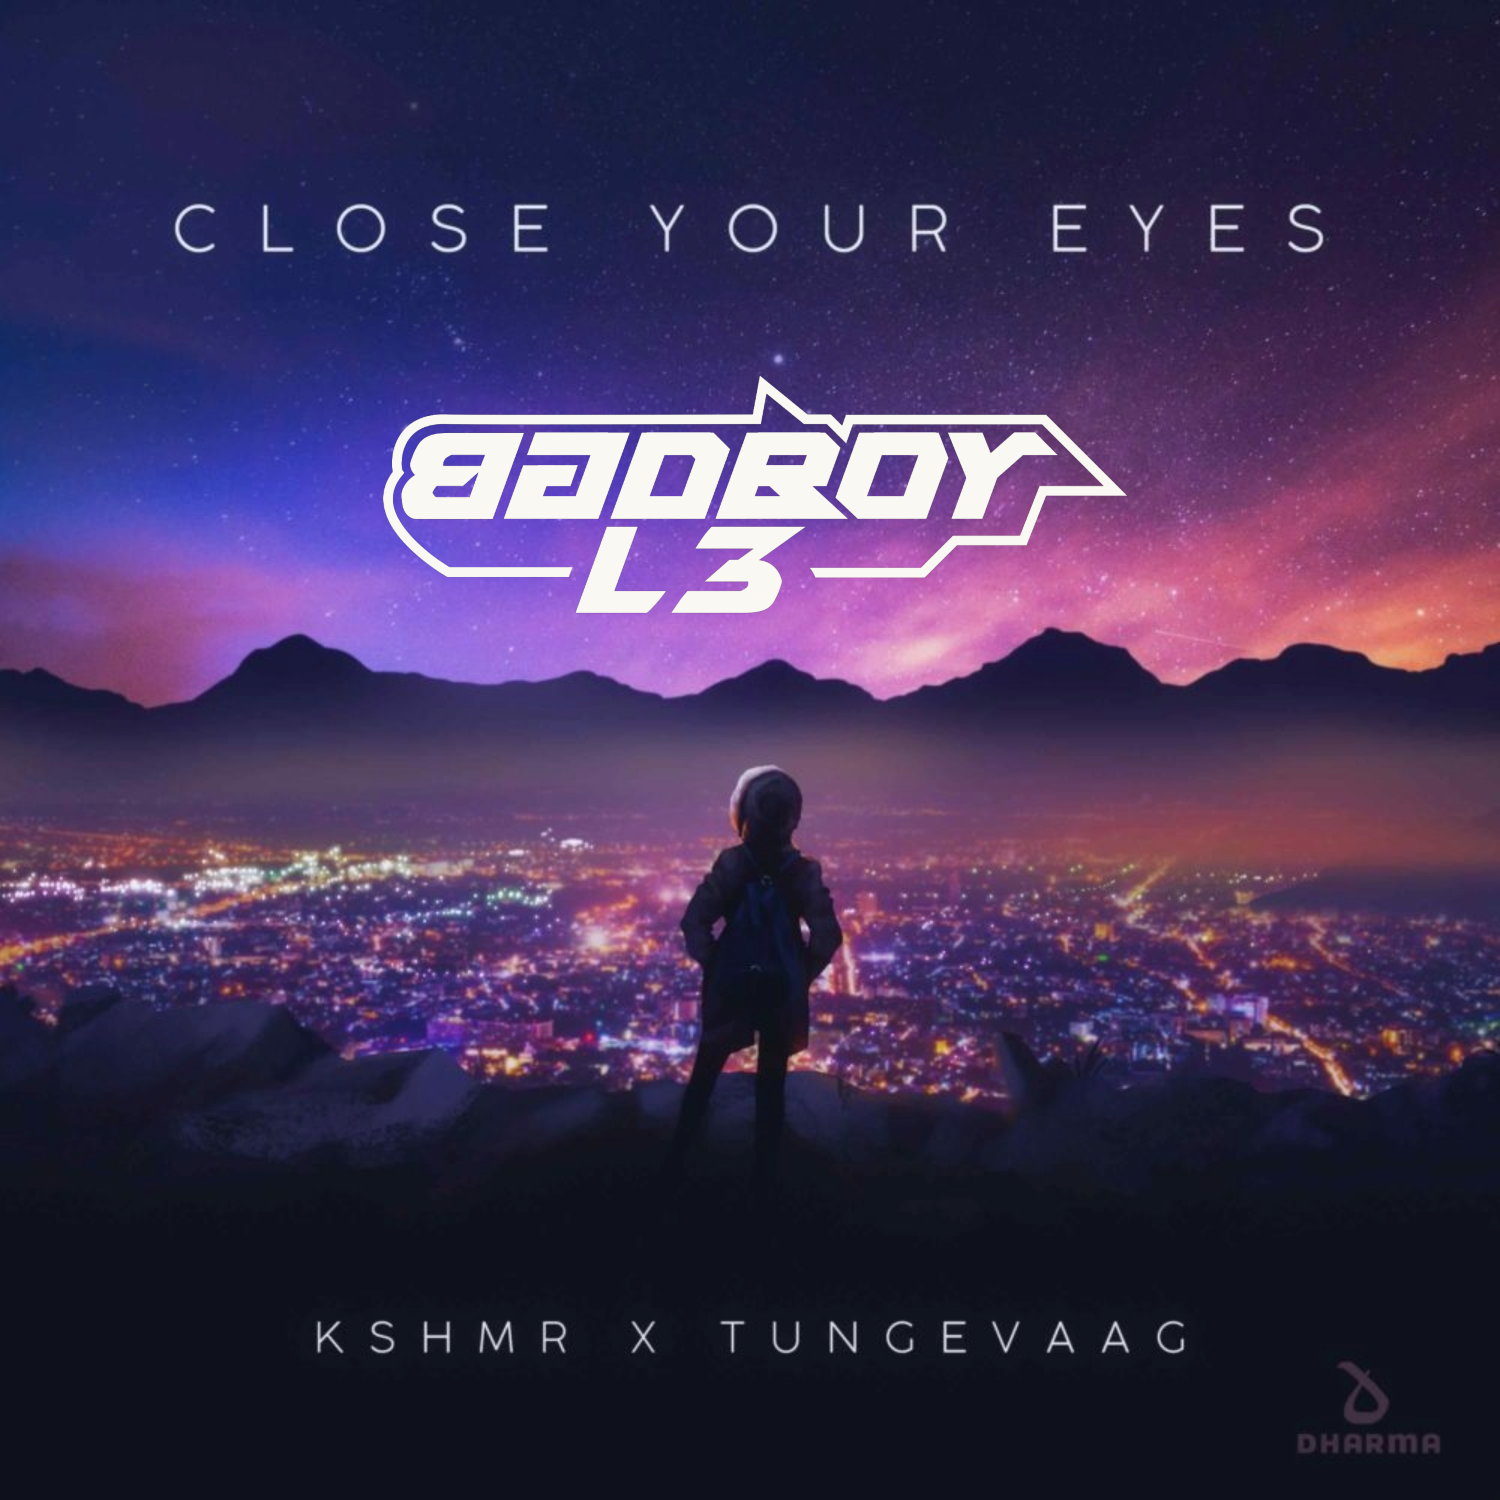 Close Your Eyes ( Badboy L3 Remix )